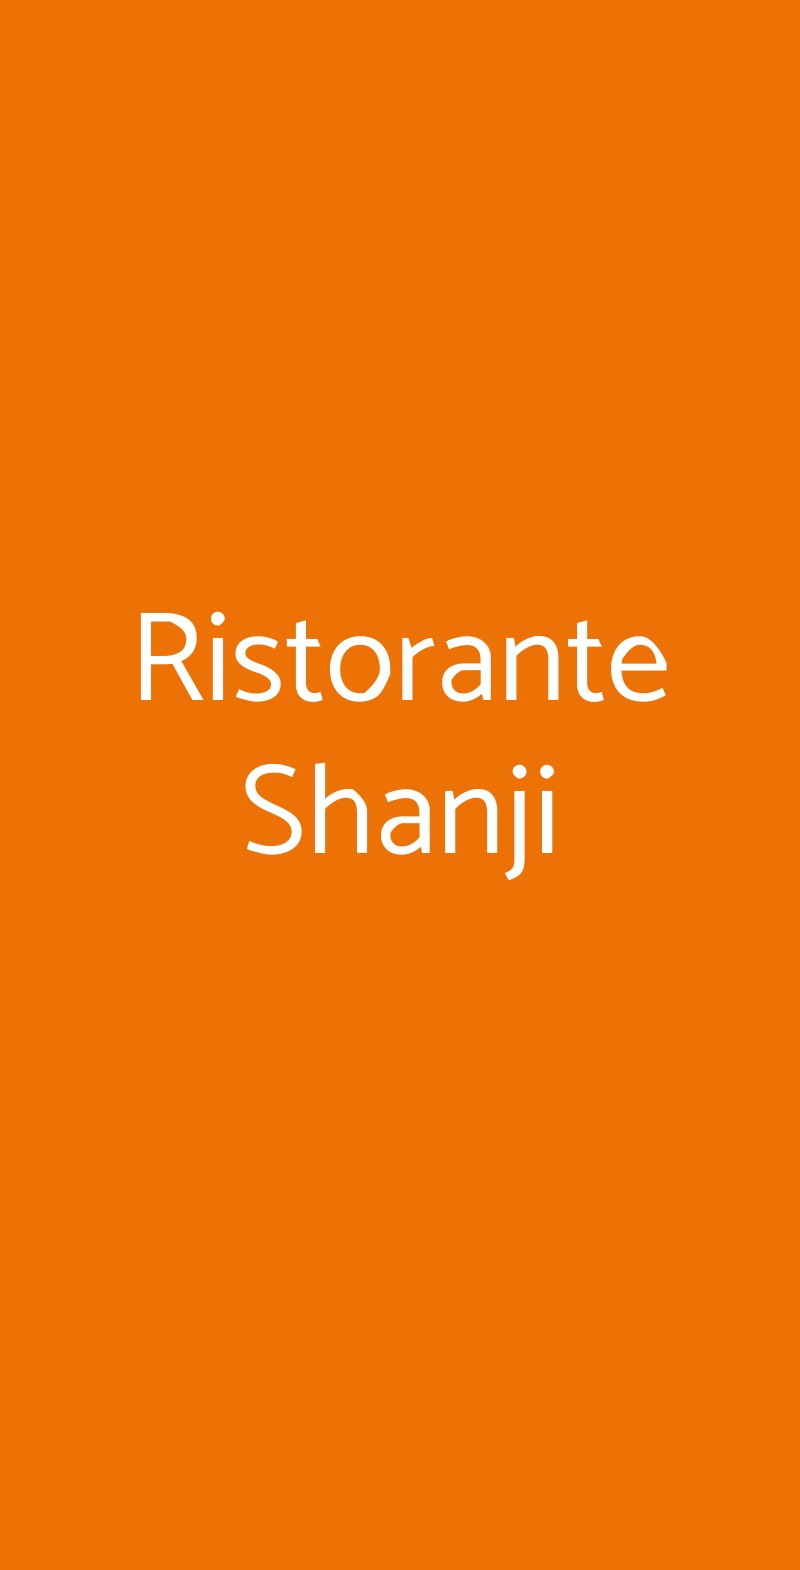 Ristorante Shanji Milano menù 1 pagina